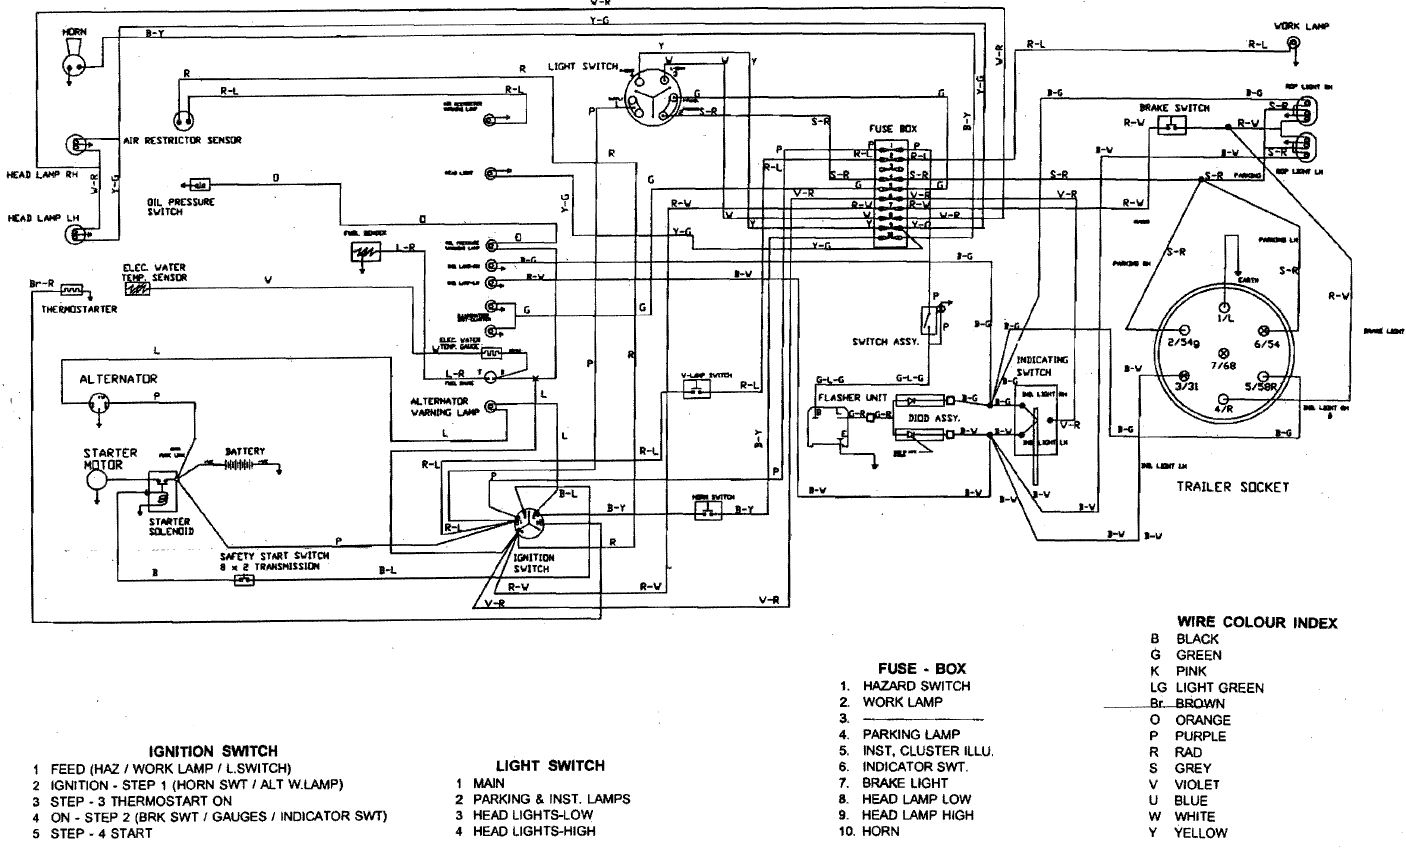 Ignition Switch Wiring Diagram - Generator Transfer Switch Wiring Diagram